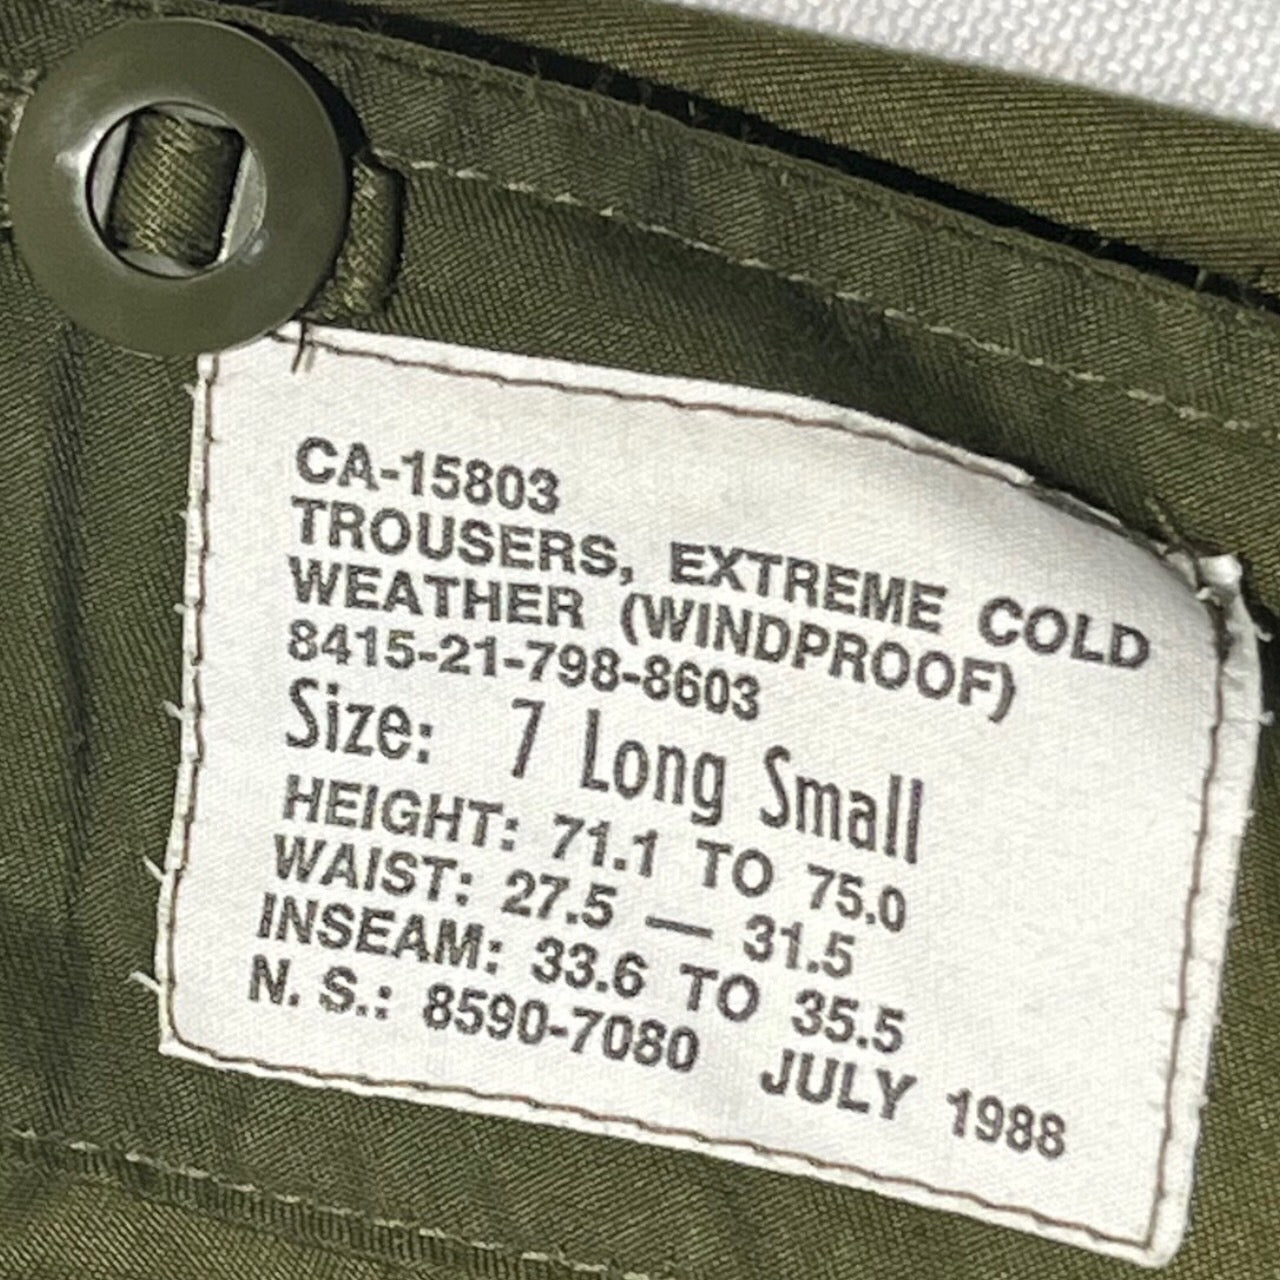 CANADIAN ARMY(カナダ軍) 80's ECW WINDPROOFオーバーパンツ 8415-21-798-8603 7 Long Smaill(XLサイズ程度) カーキ 1988年7月製造